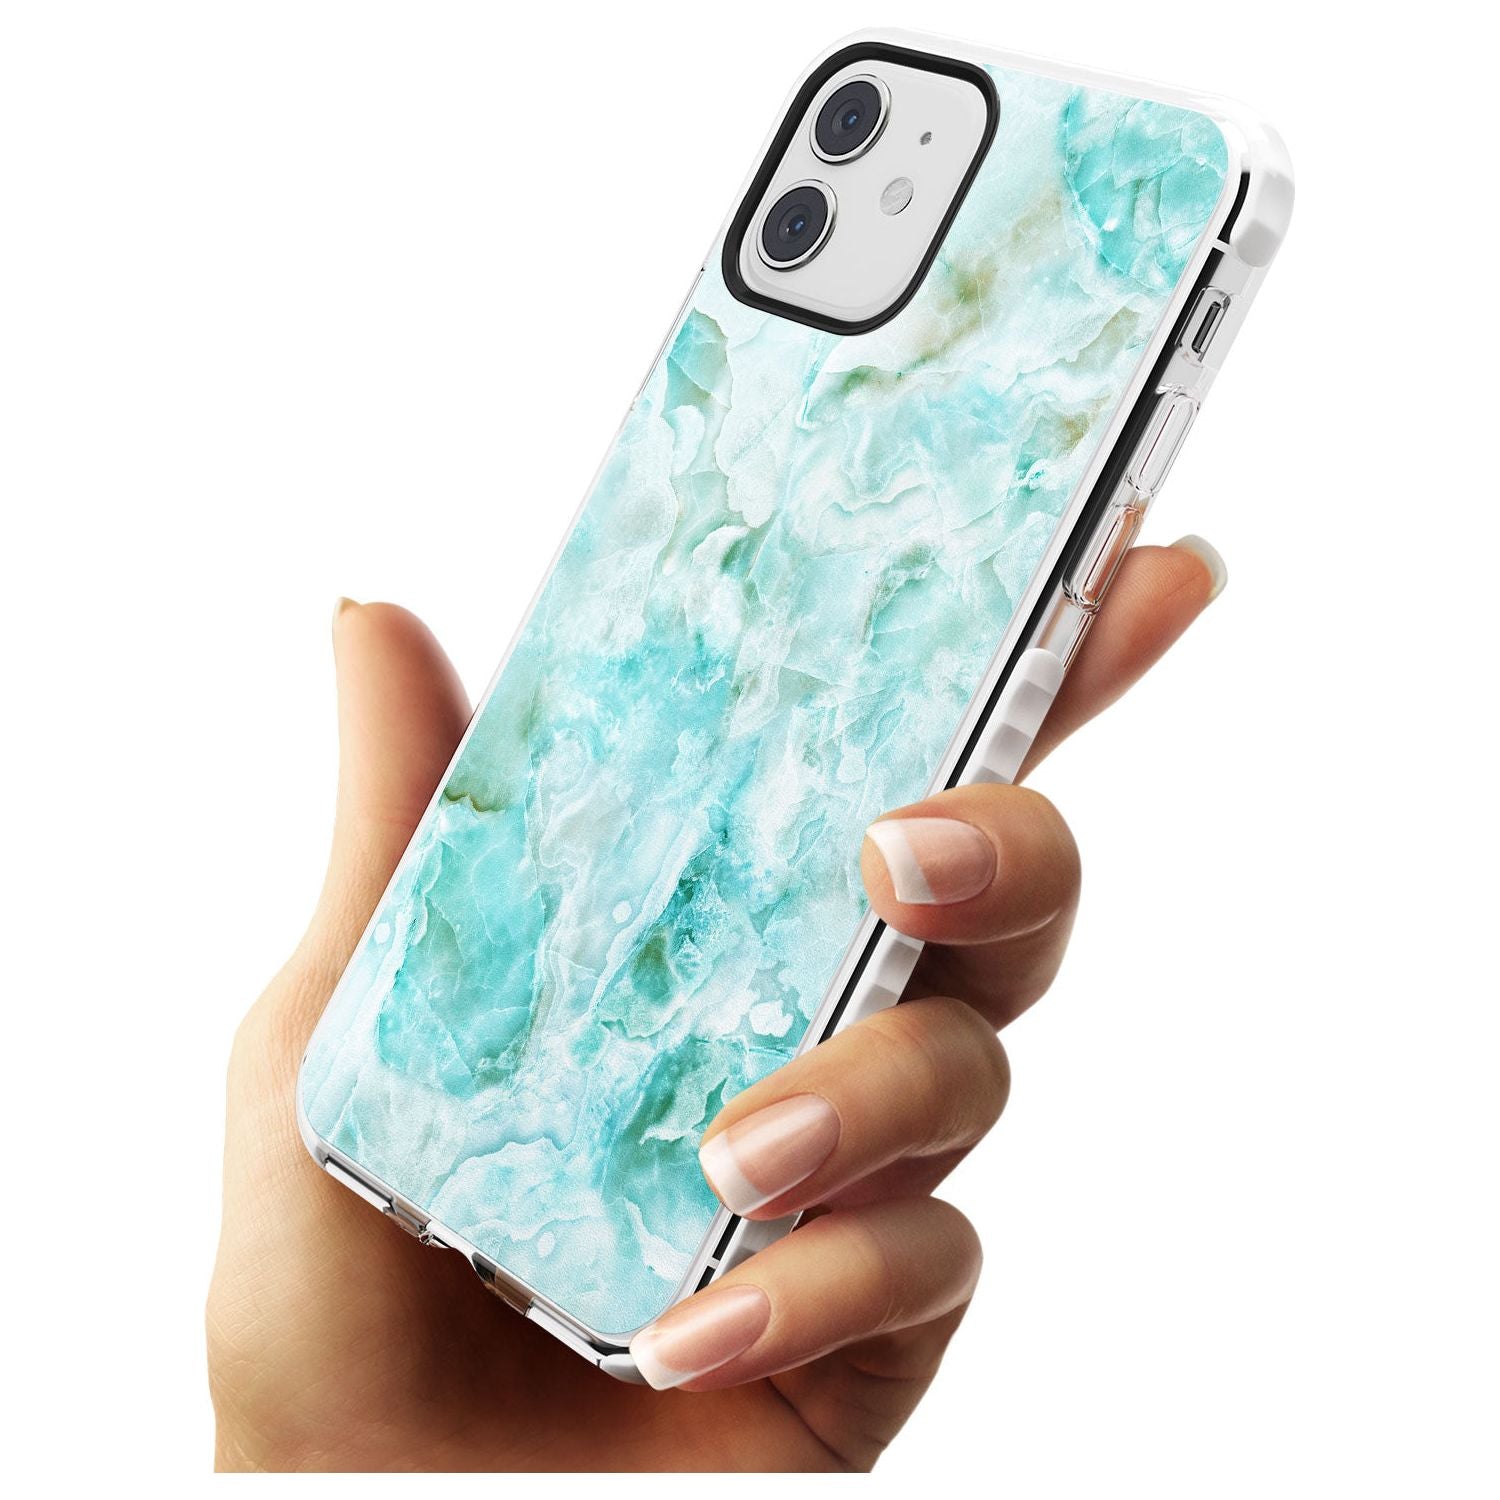 Turquoise Aqua Onyx Marble Slim TPU Phone Case for iPhone 11